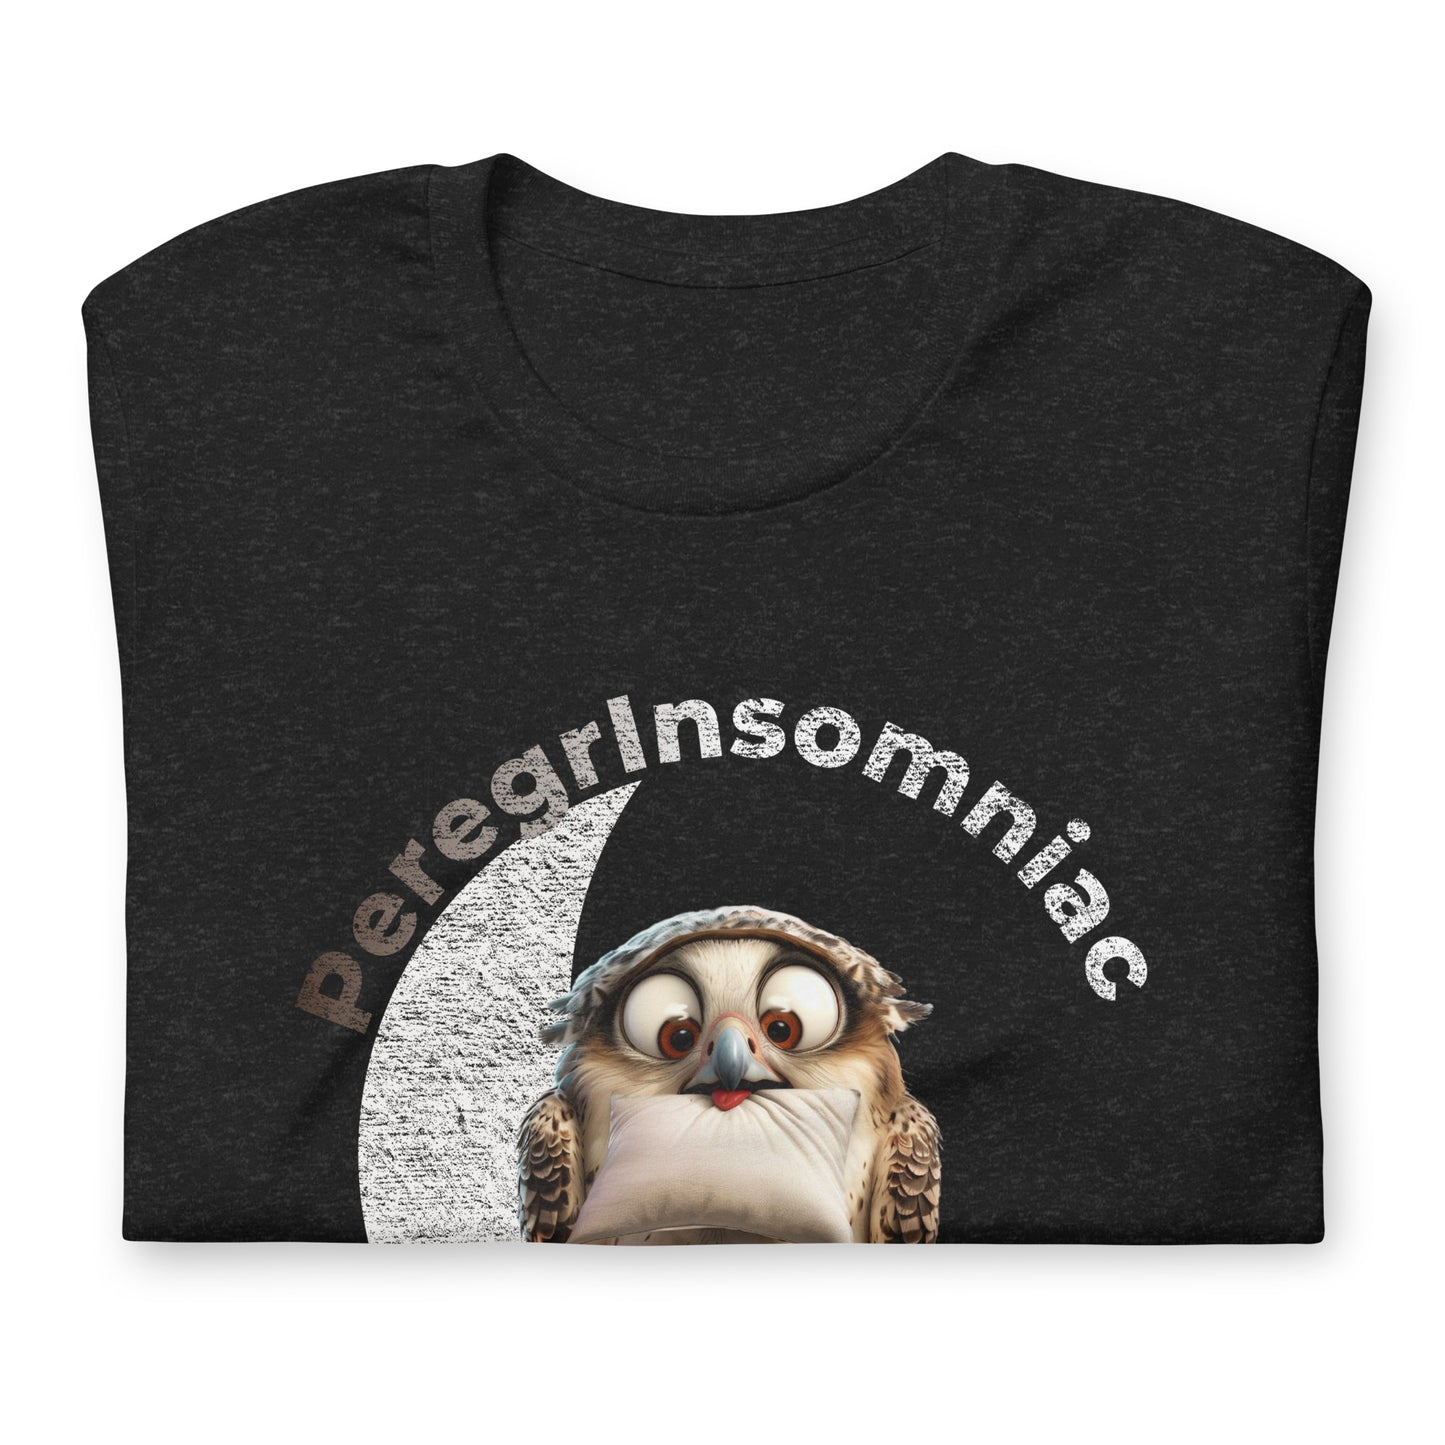 PeregrInsomniac, Insomniac Peregrin, Insomnia, Animals, Sleep Disorders, Graphic Tee Shirt, Black